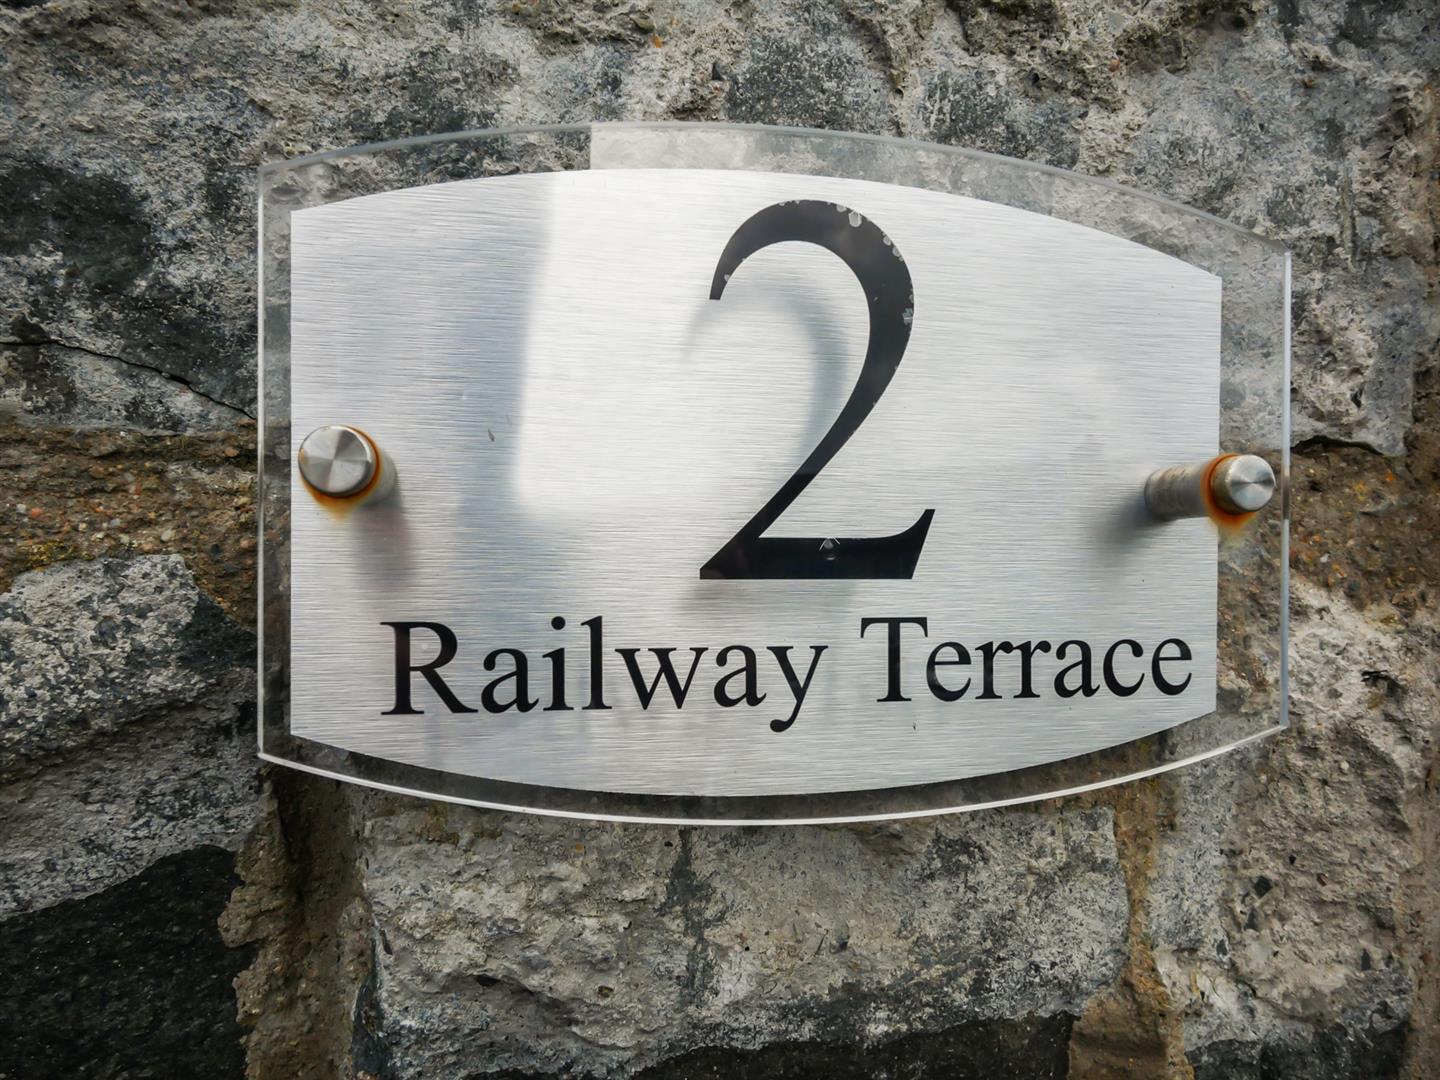 2 Railway Terrace